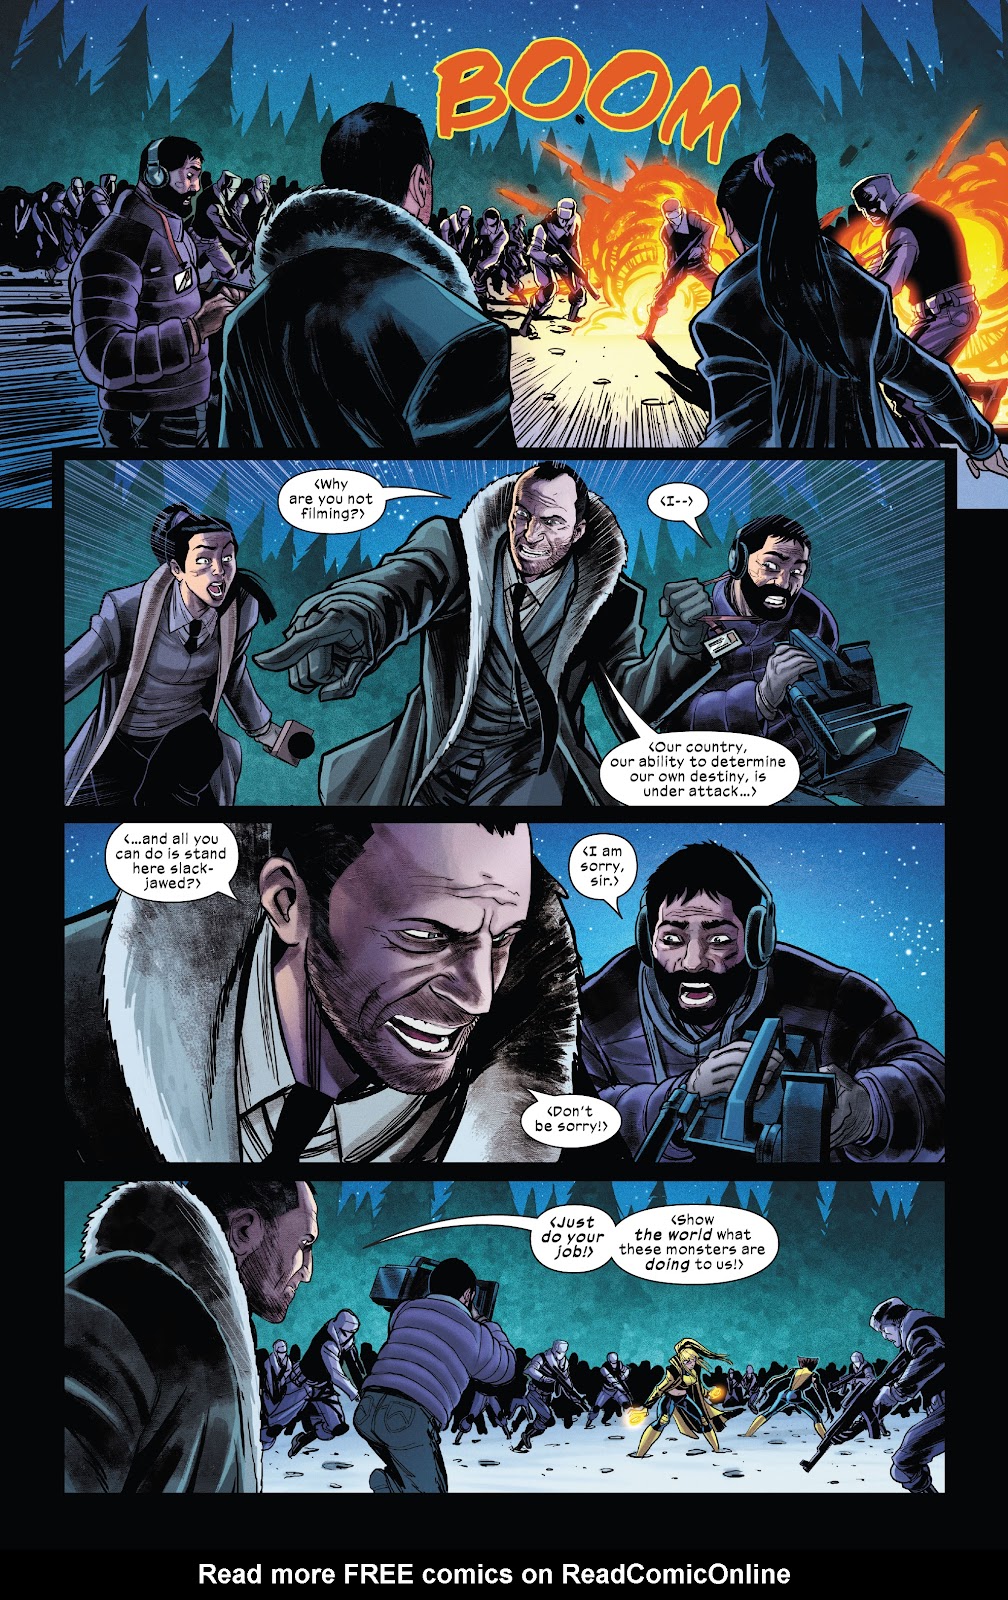 New Mutants #28 — You Don't Read Comics